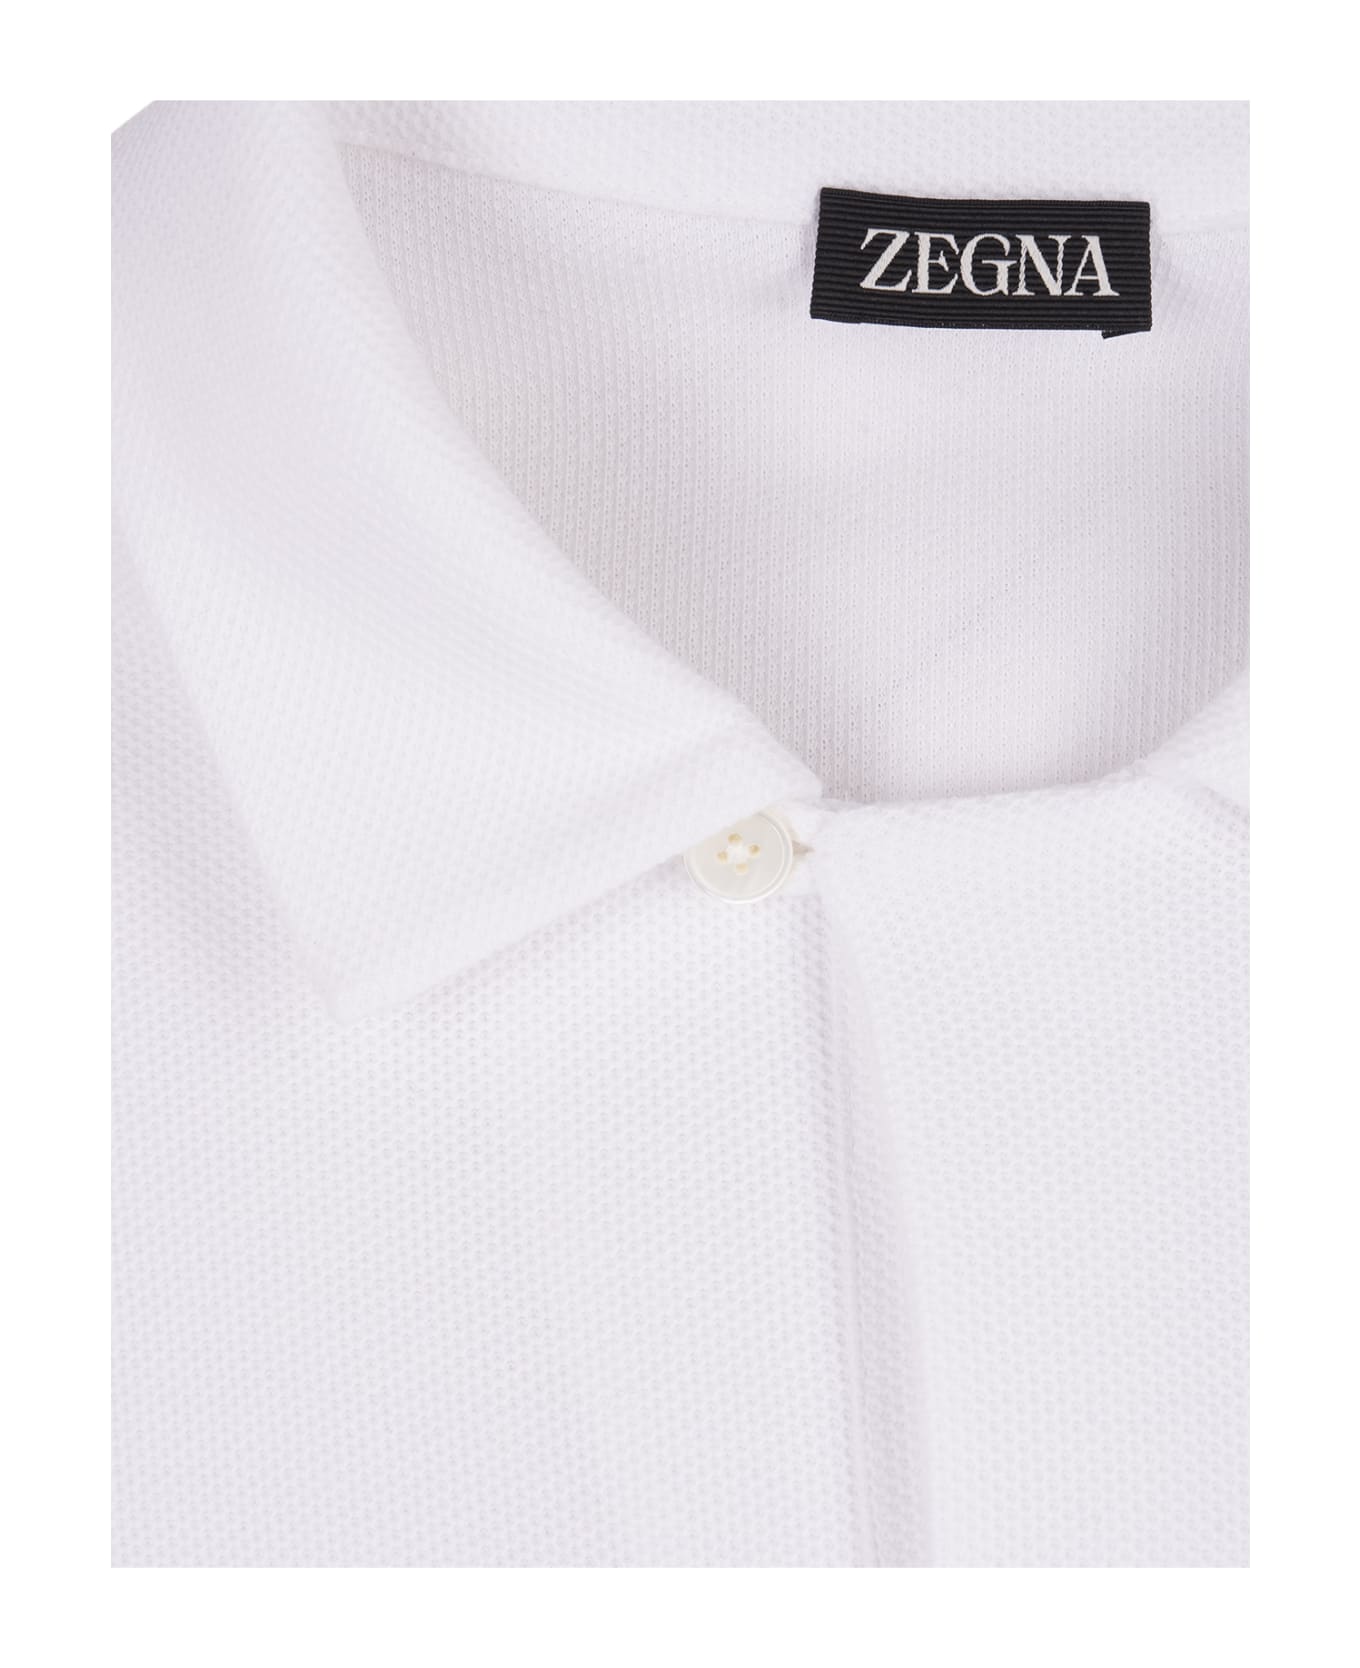 Zegna White Honeycomb Cotton Polo Shirt - White